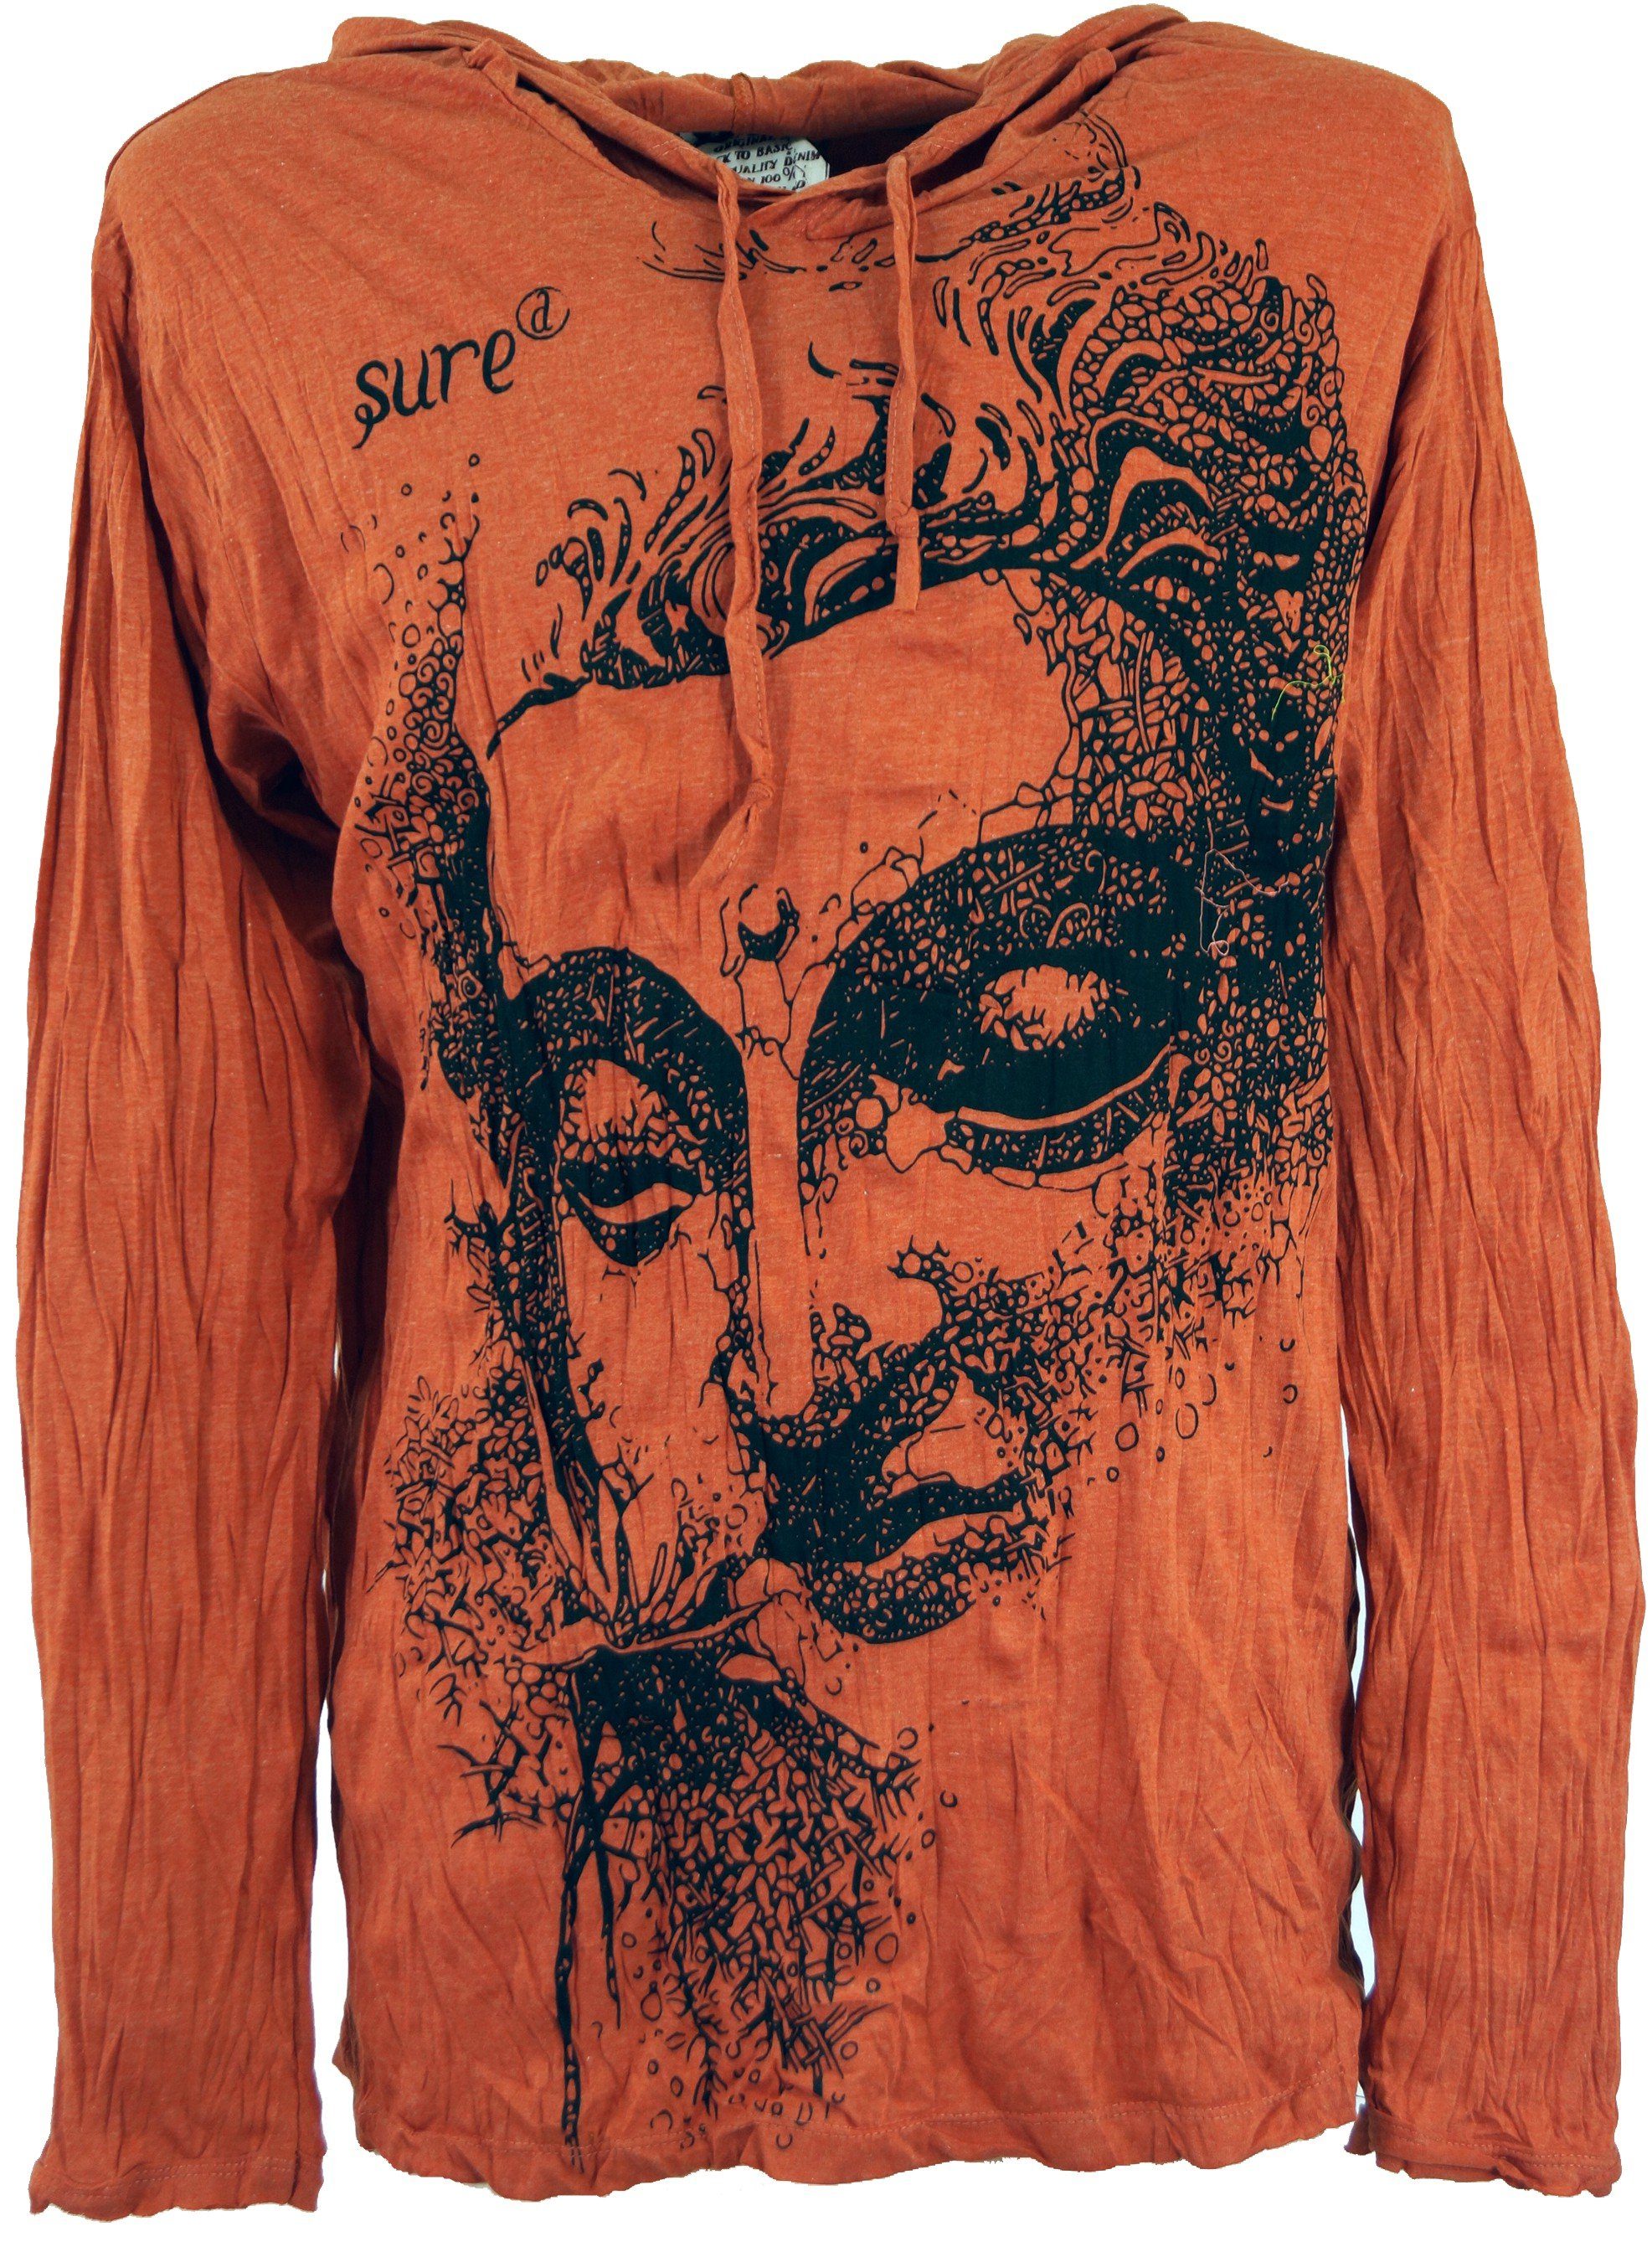 Guru-Shop T-Shirt Festival, Buddha.. Goa rostorange Langarmshirt, Sure Bekleidung Style, Dreaming alternative Kapuzenshirt